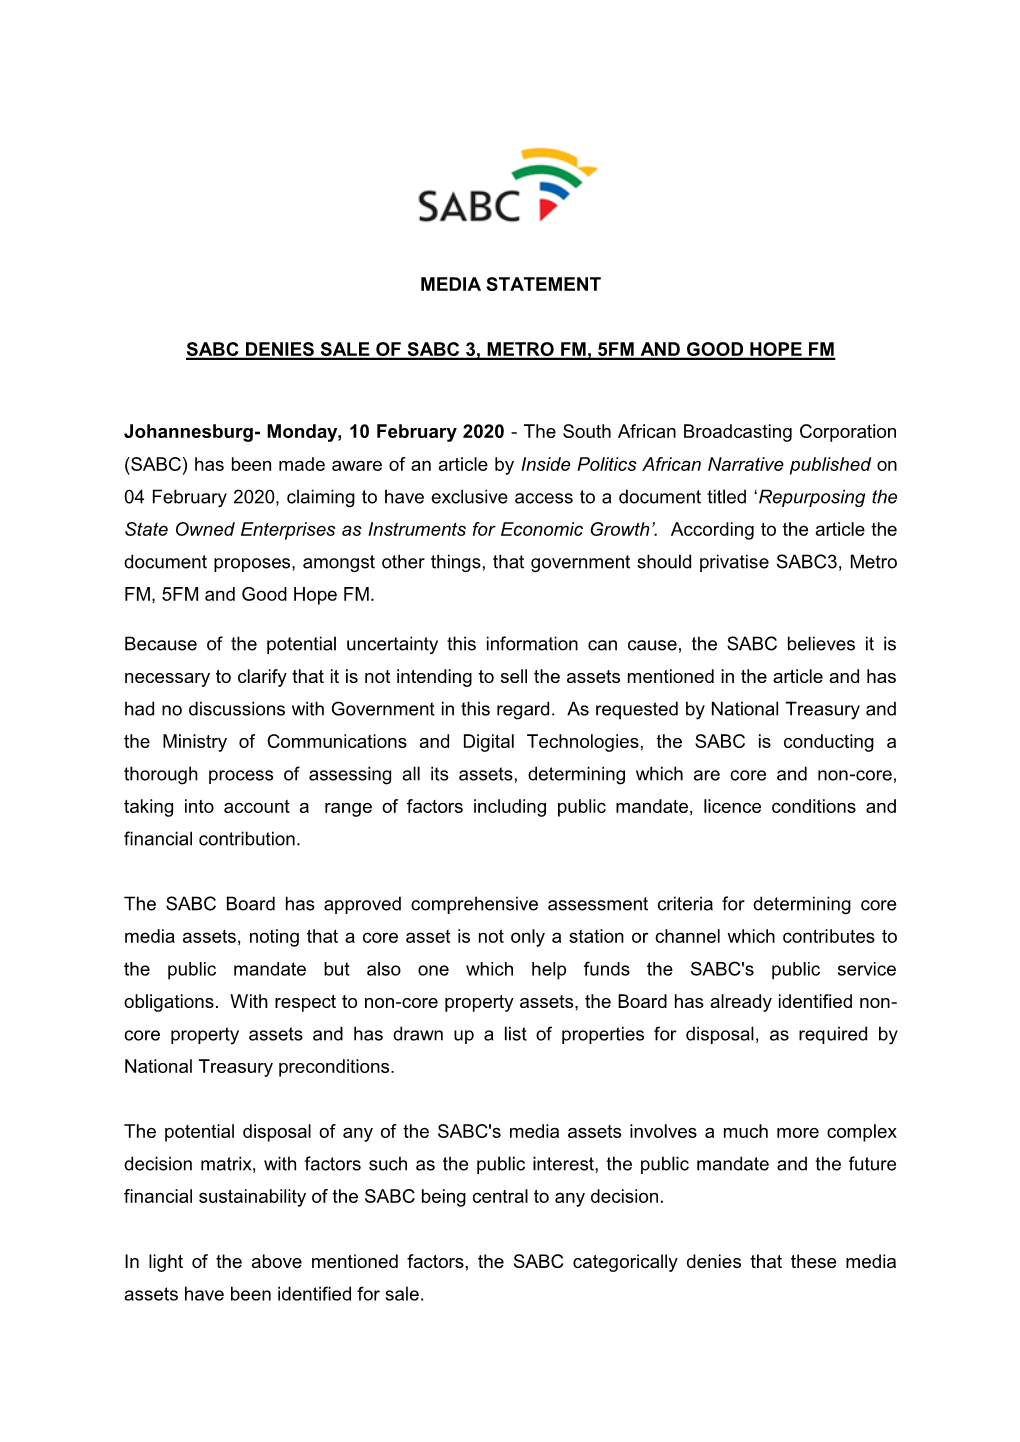 Sabc Denies Sale of Sabc 3, Metro Fm, 5Fm and Good Hope Fm